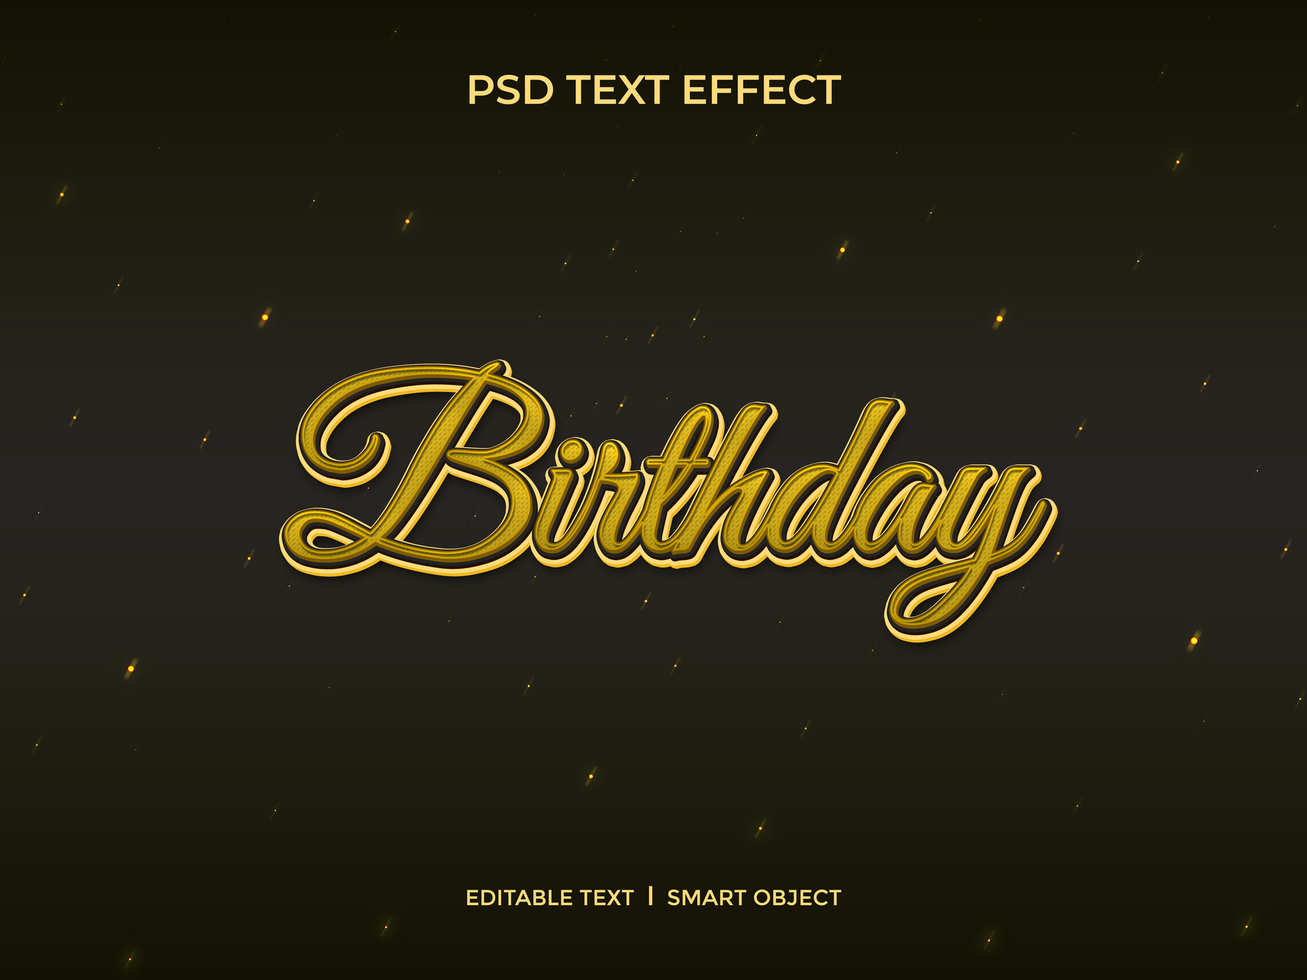 Birthday text effect psd